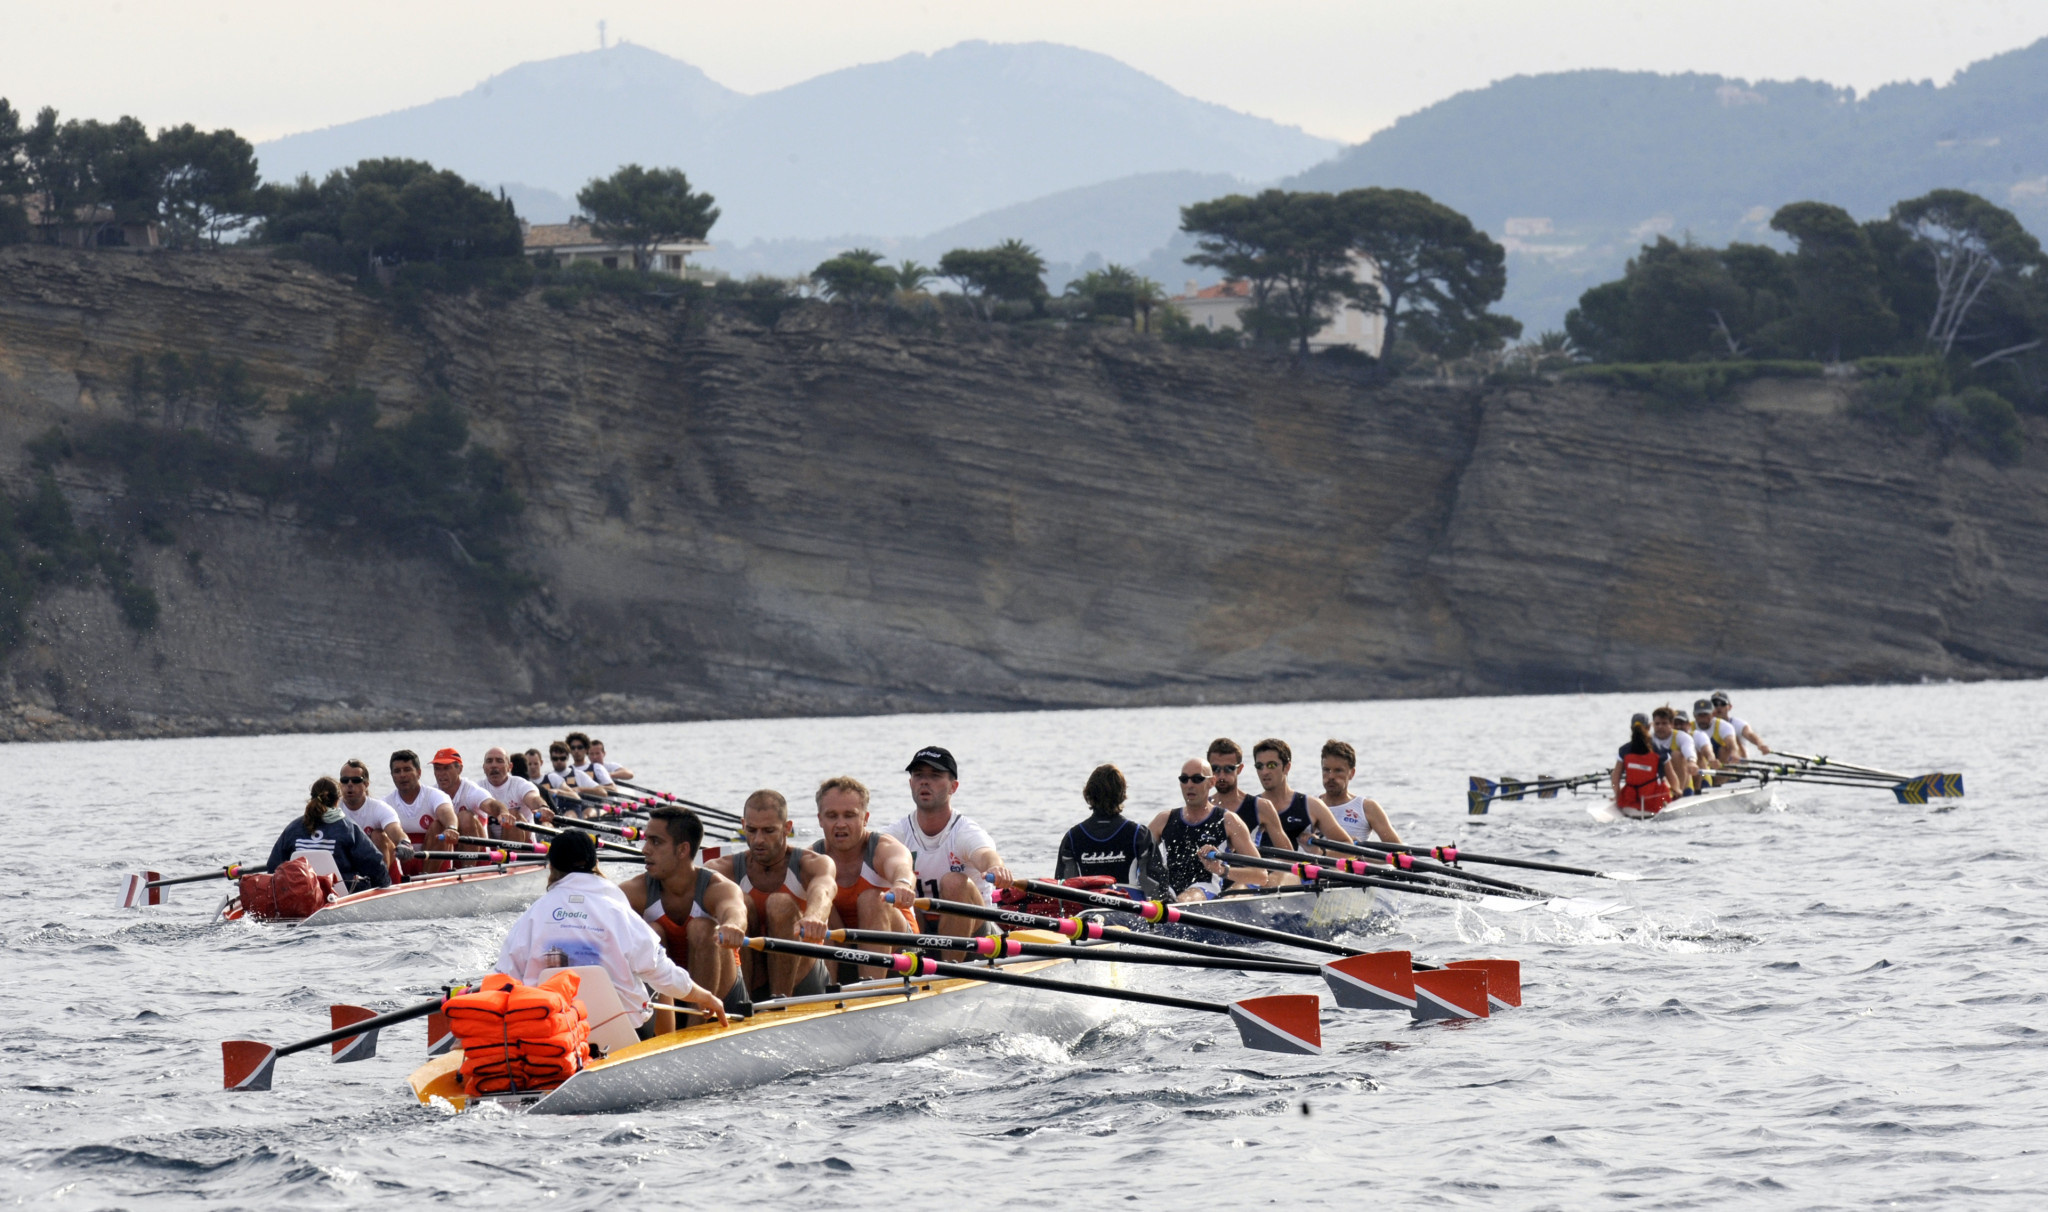 Rowing: An open-water lightweight coastal pulling in Los Angeles, An international water racing sports discipline. 2050x1220 HD Wallpaper.